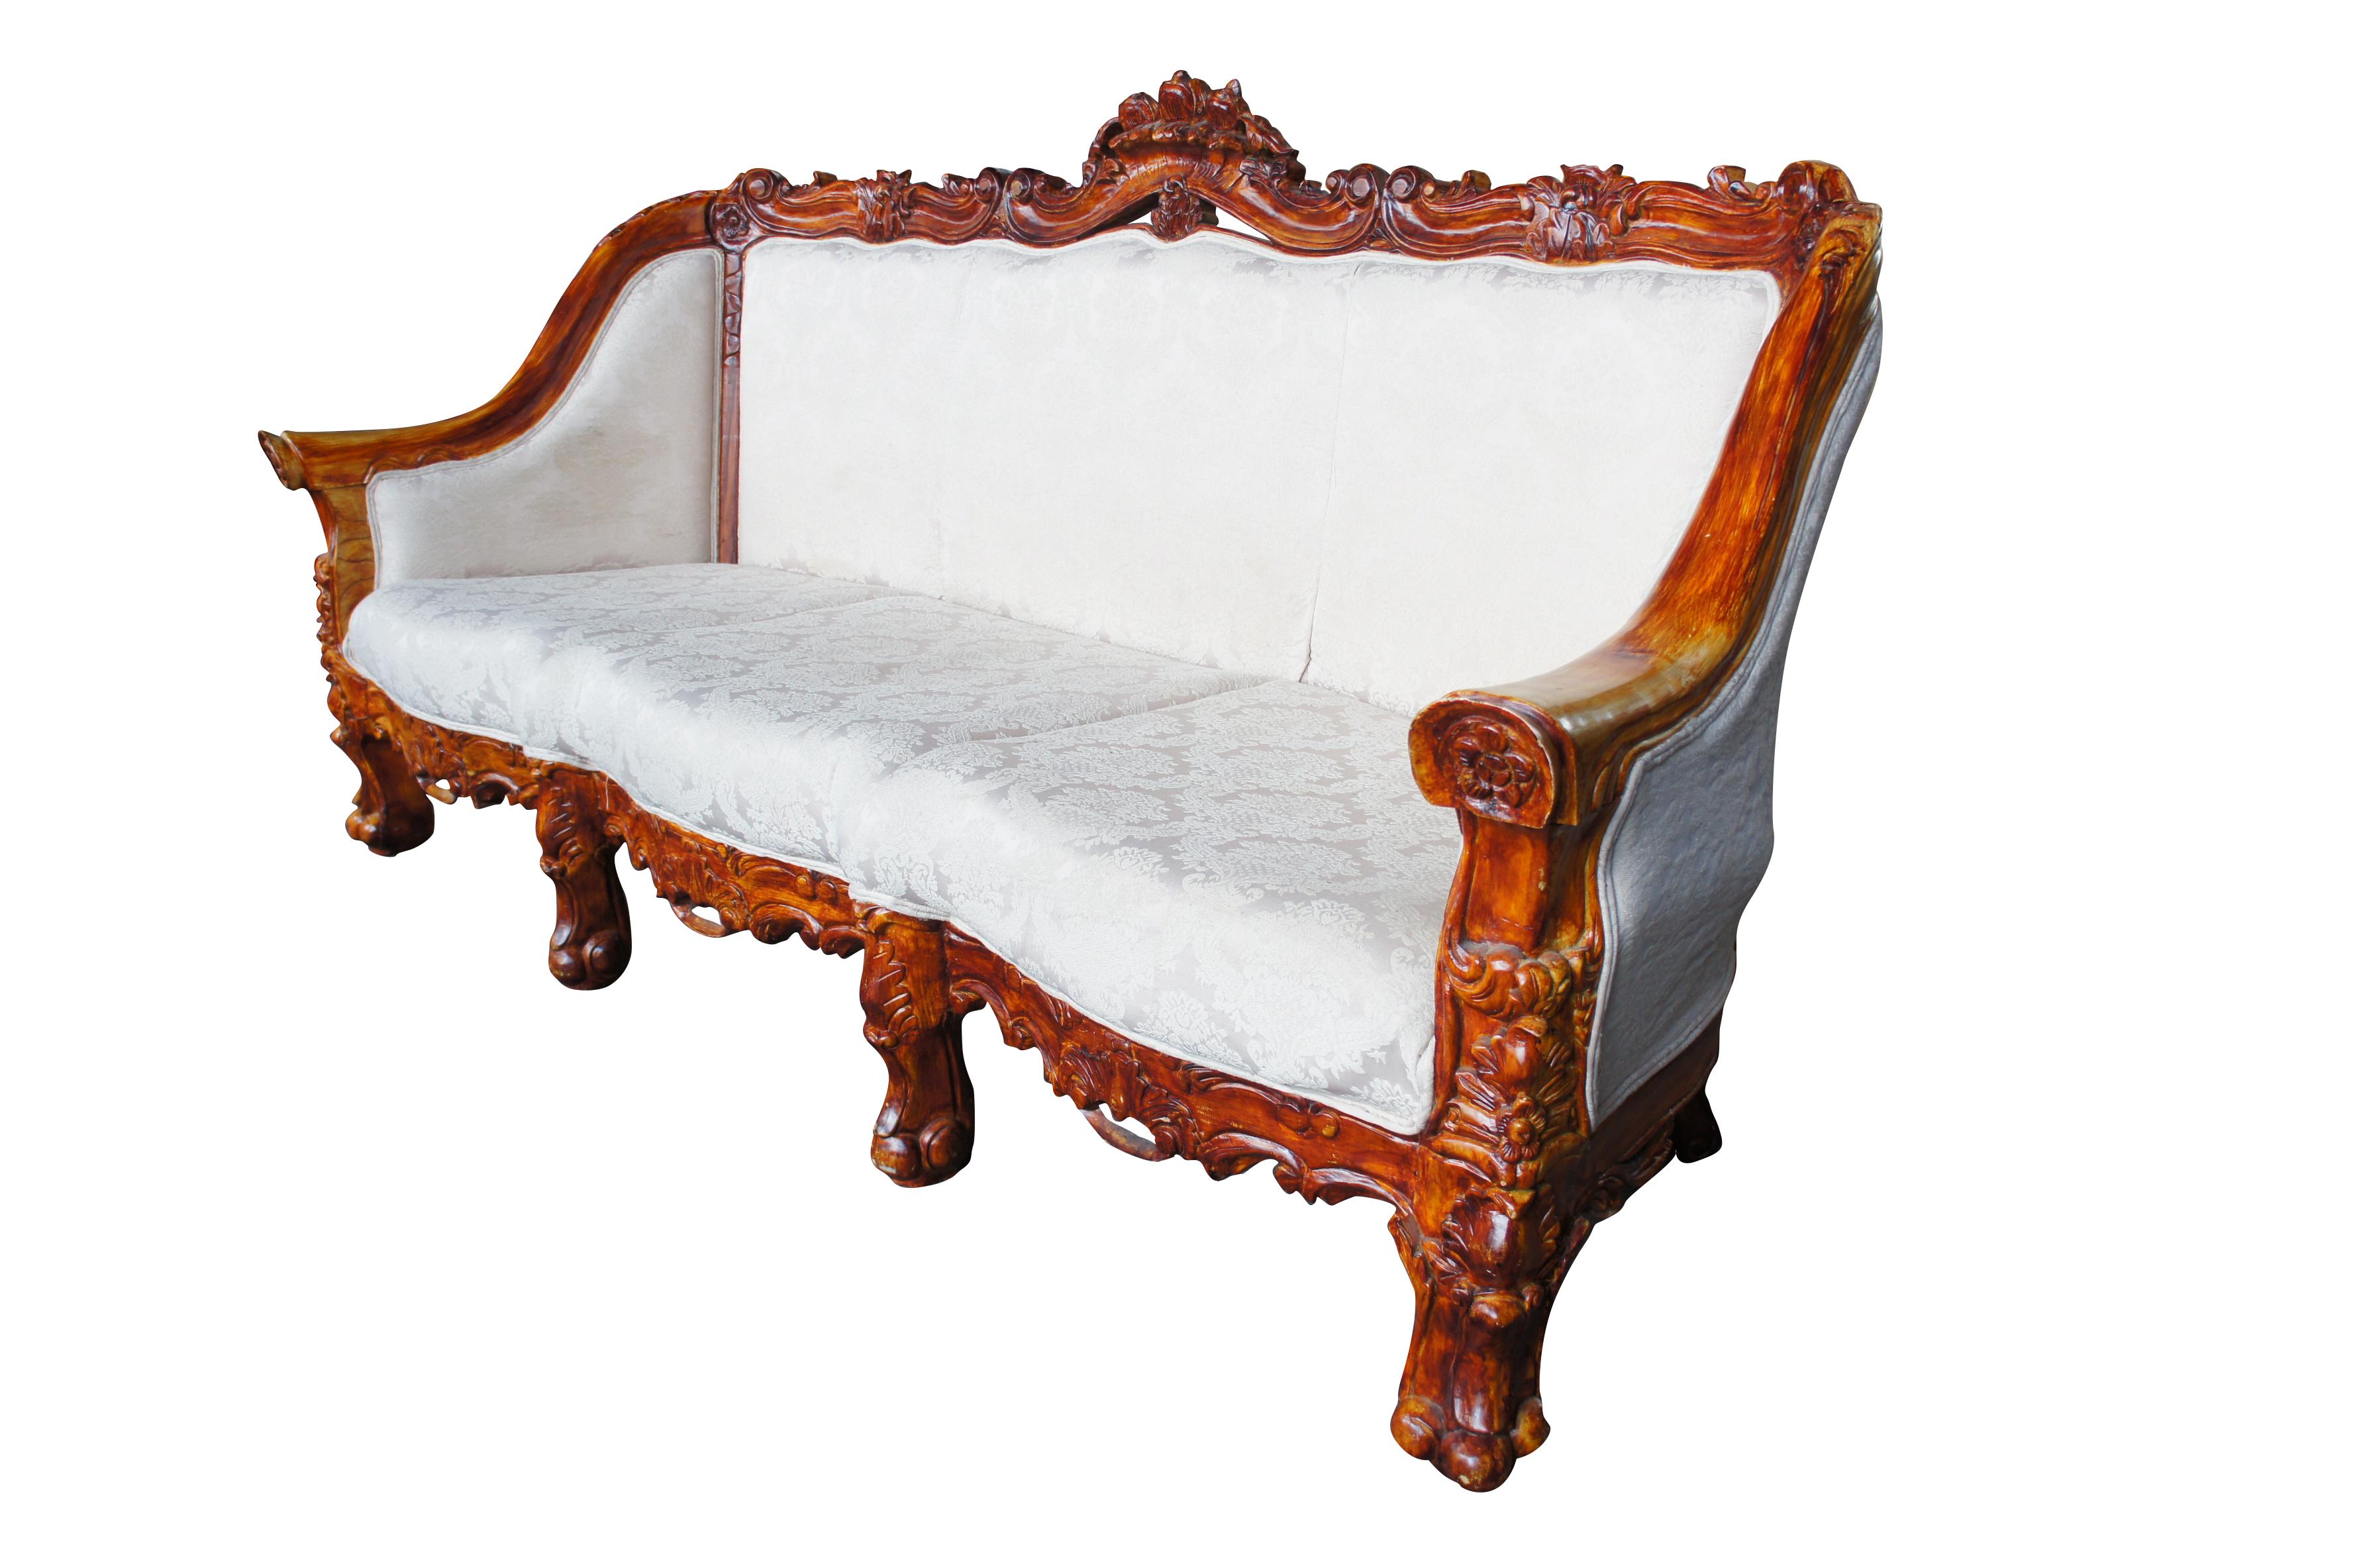 Rococo Revival Antiqued Baroque Rococo High Relief Carved Settee Continental Sofa Brocade Seat